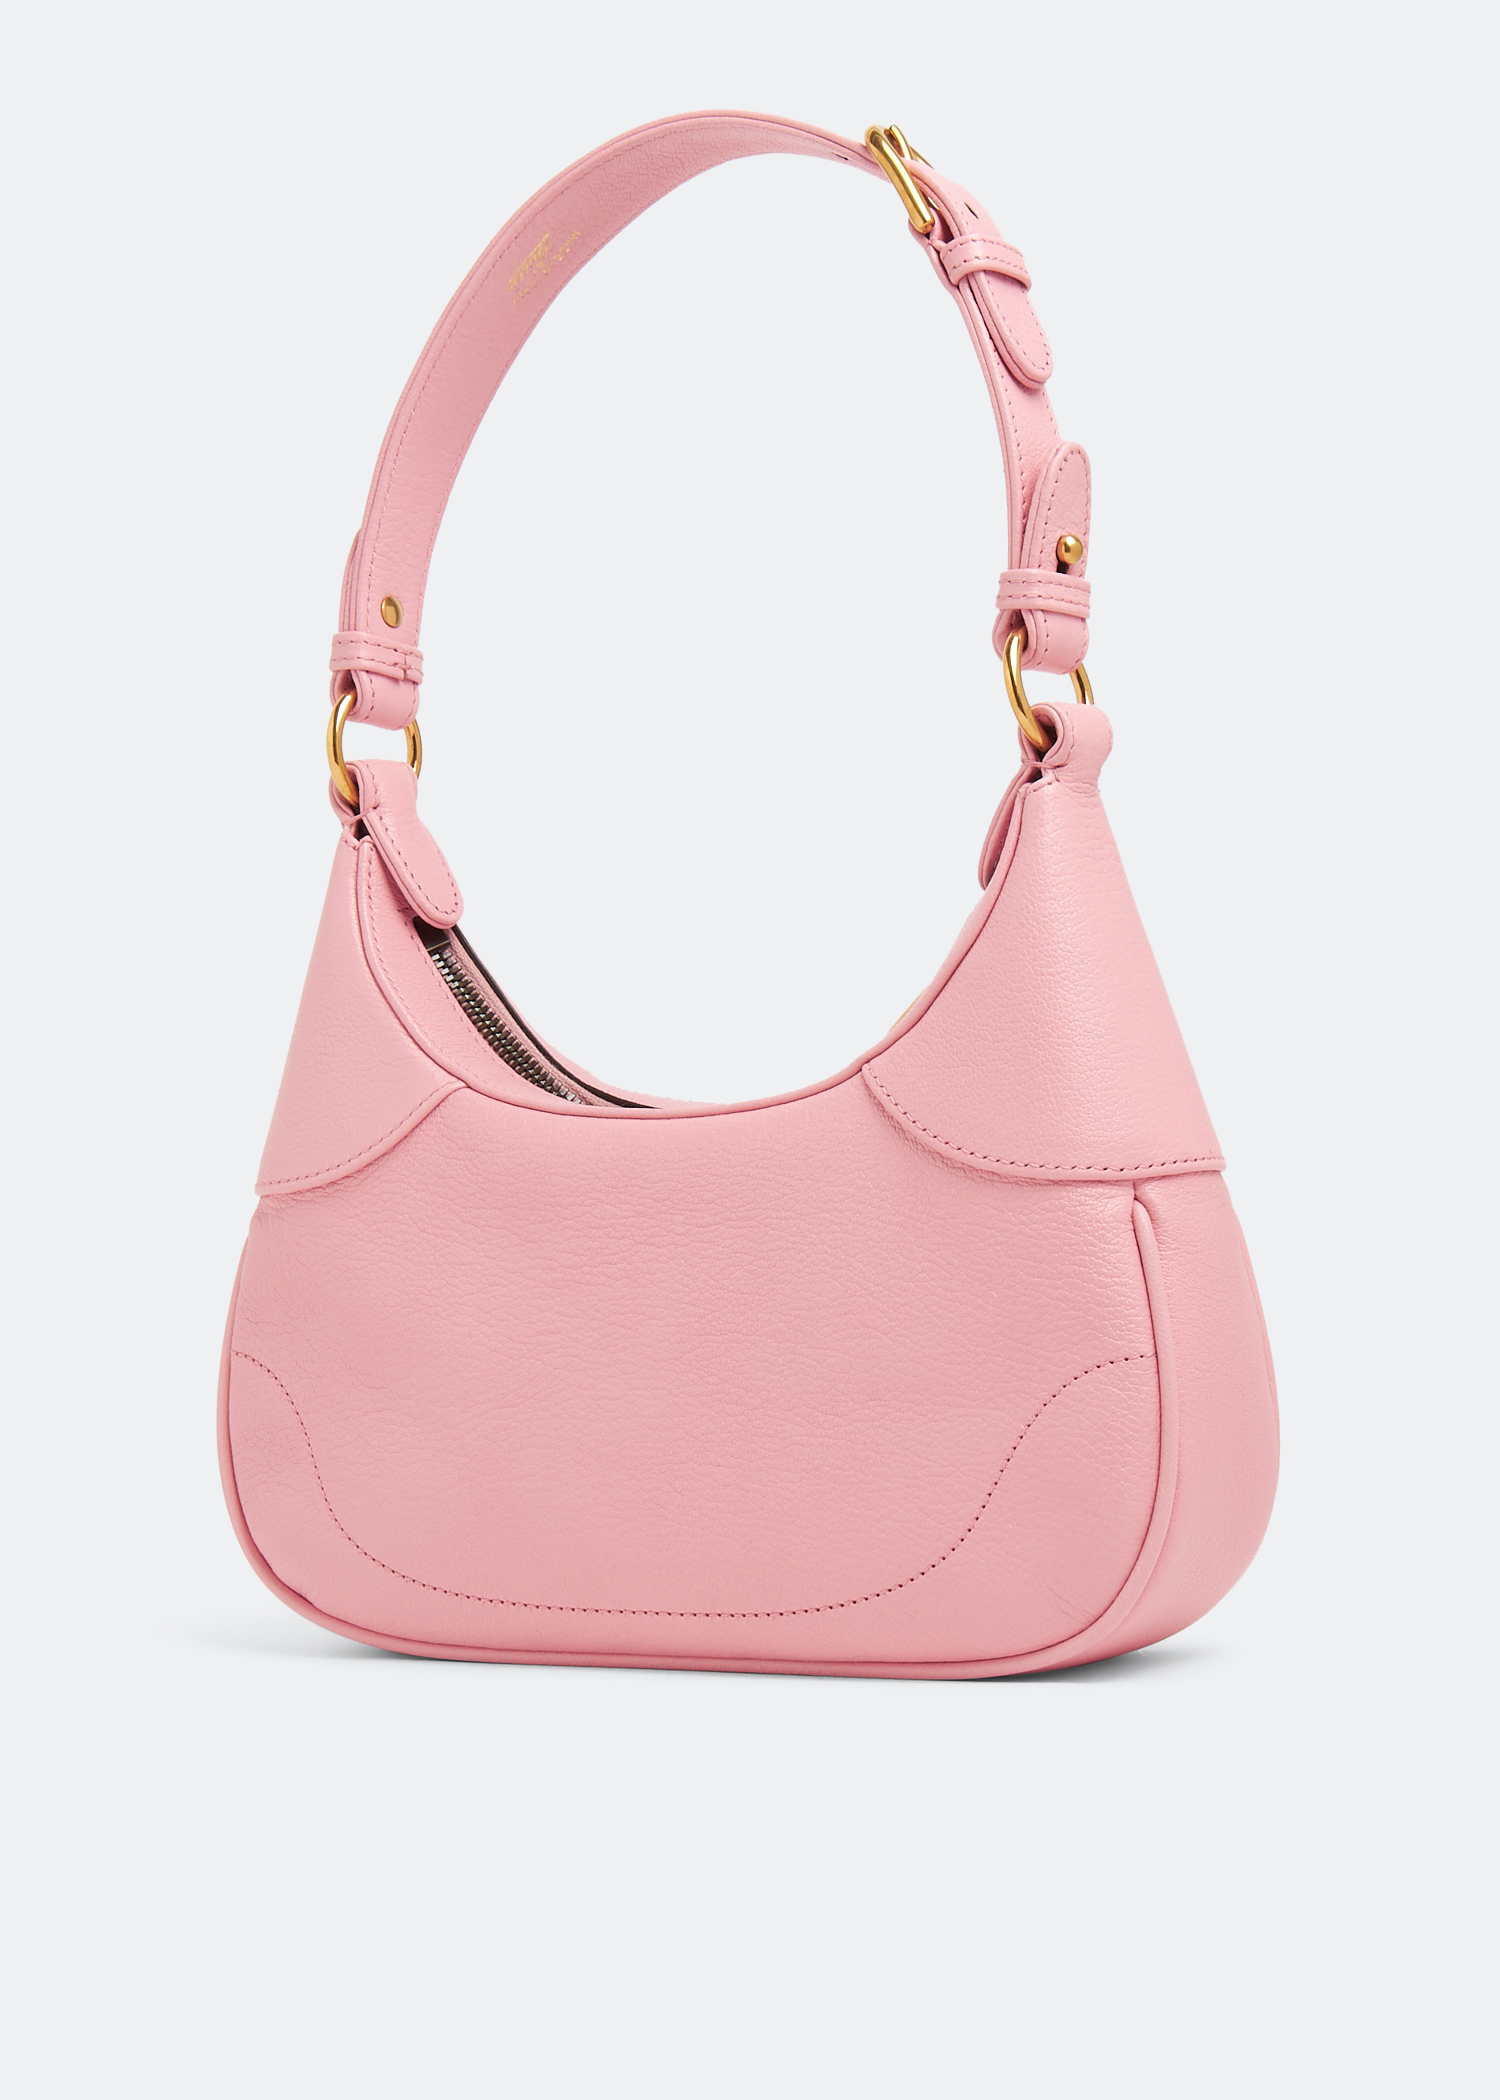 GUCCI Aphrodite Small Shoulder Bag Leather Pink 731817 Purse 90195682